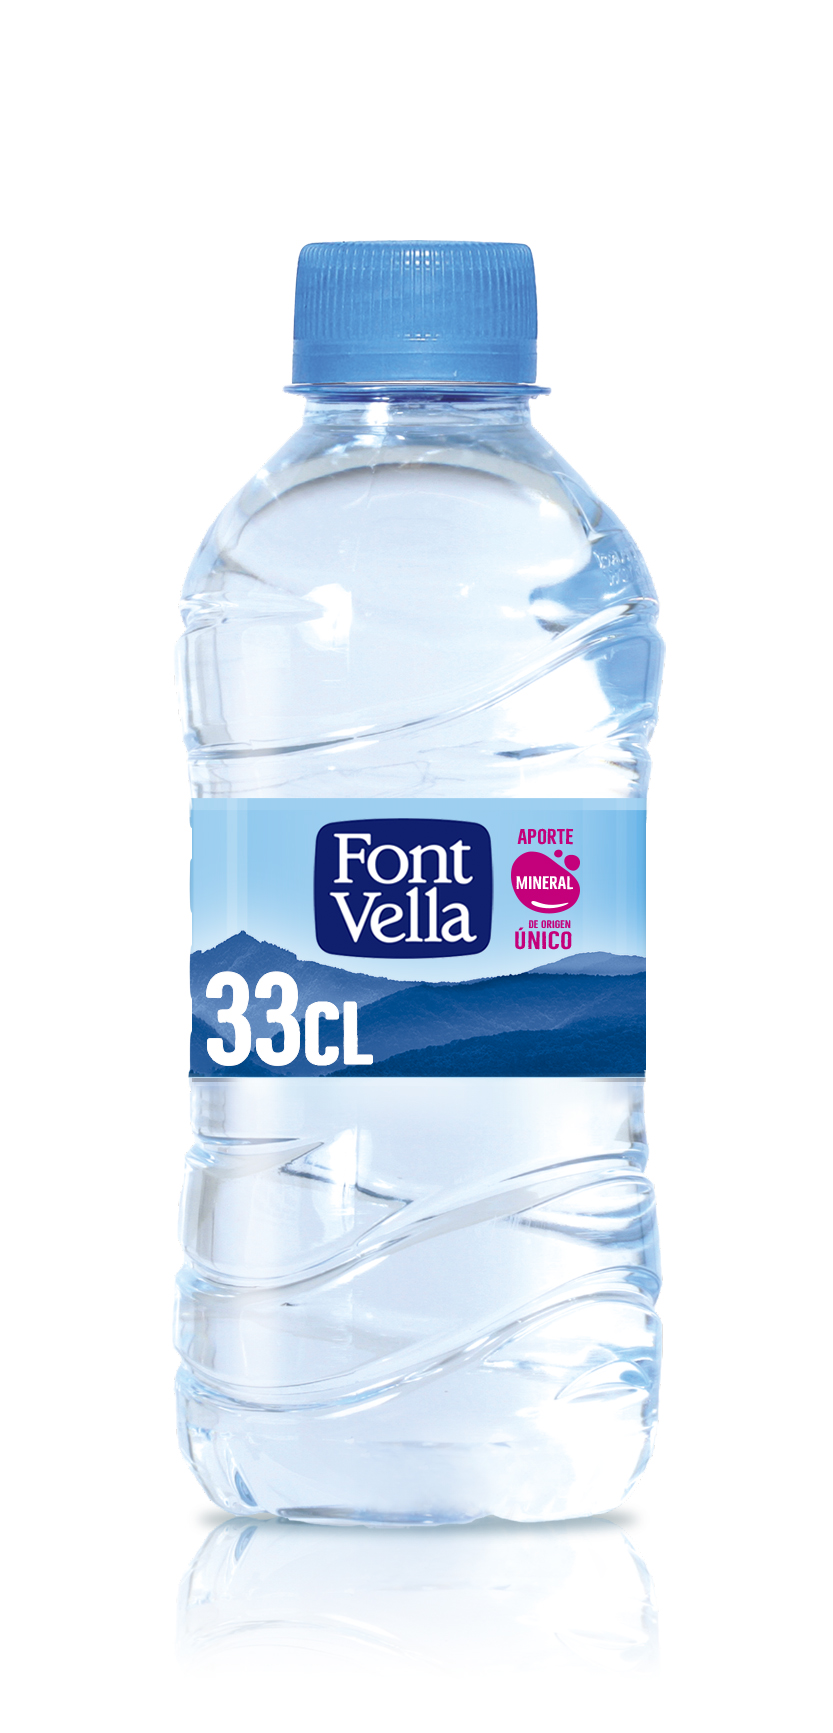 Agua mineral Font Vella 6.25 litros pack 3 garrafas